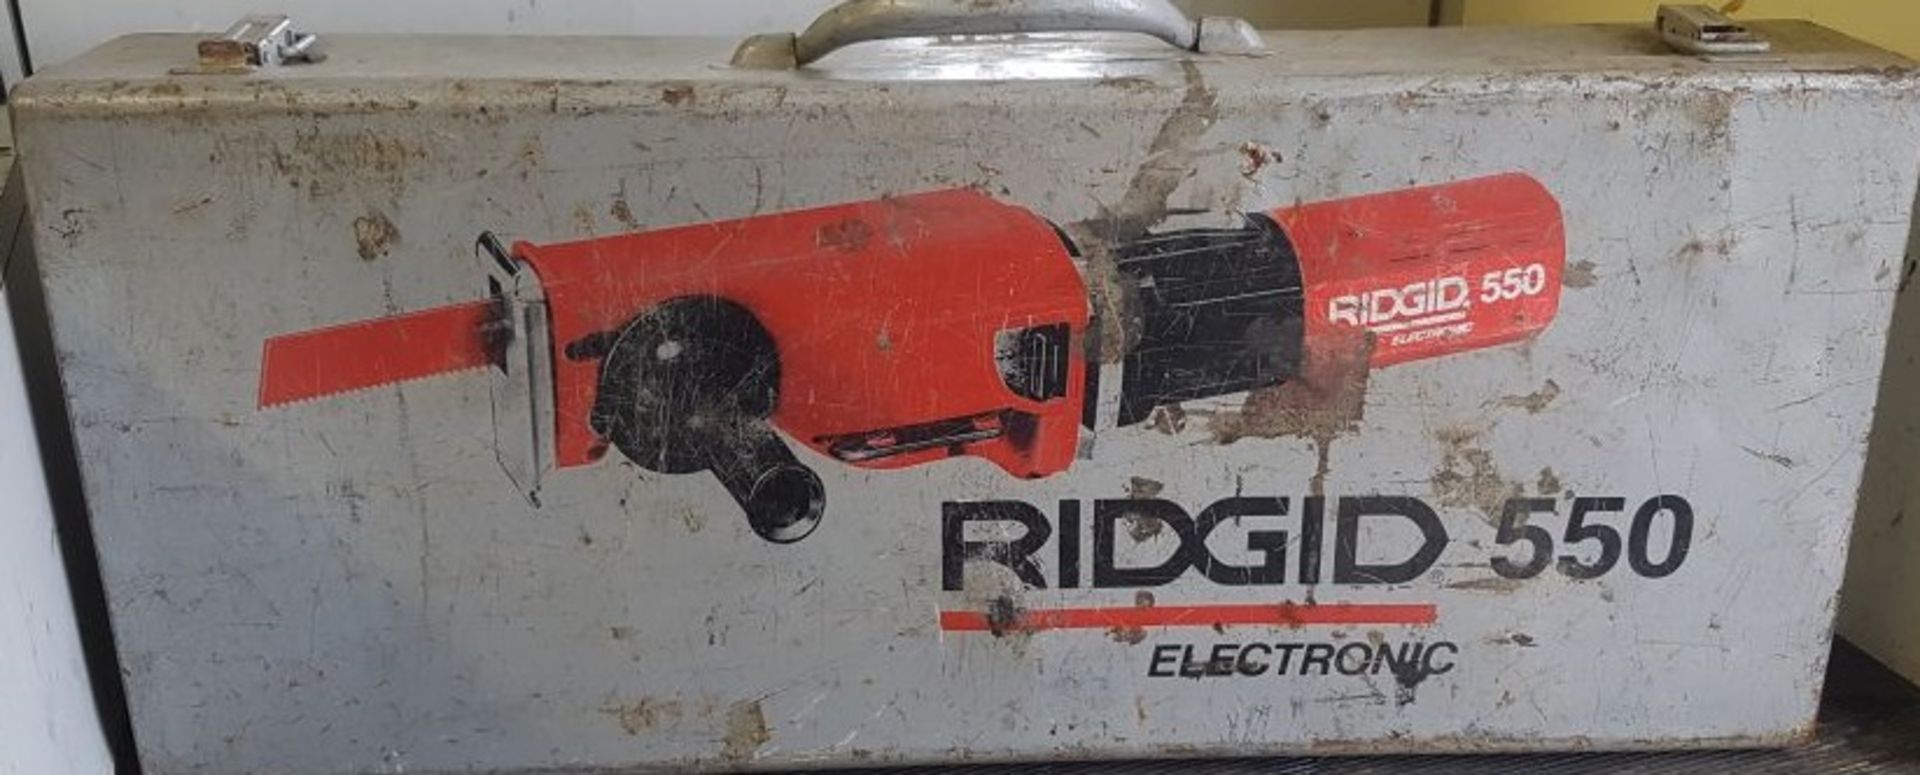 Rigid 550 Reciprocating Saw - Image 6 of 6